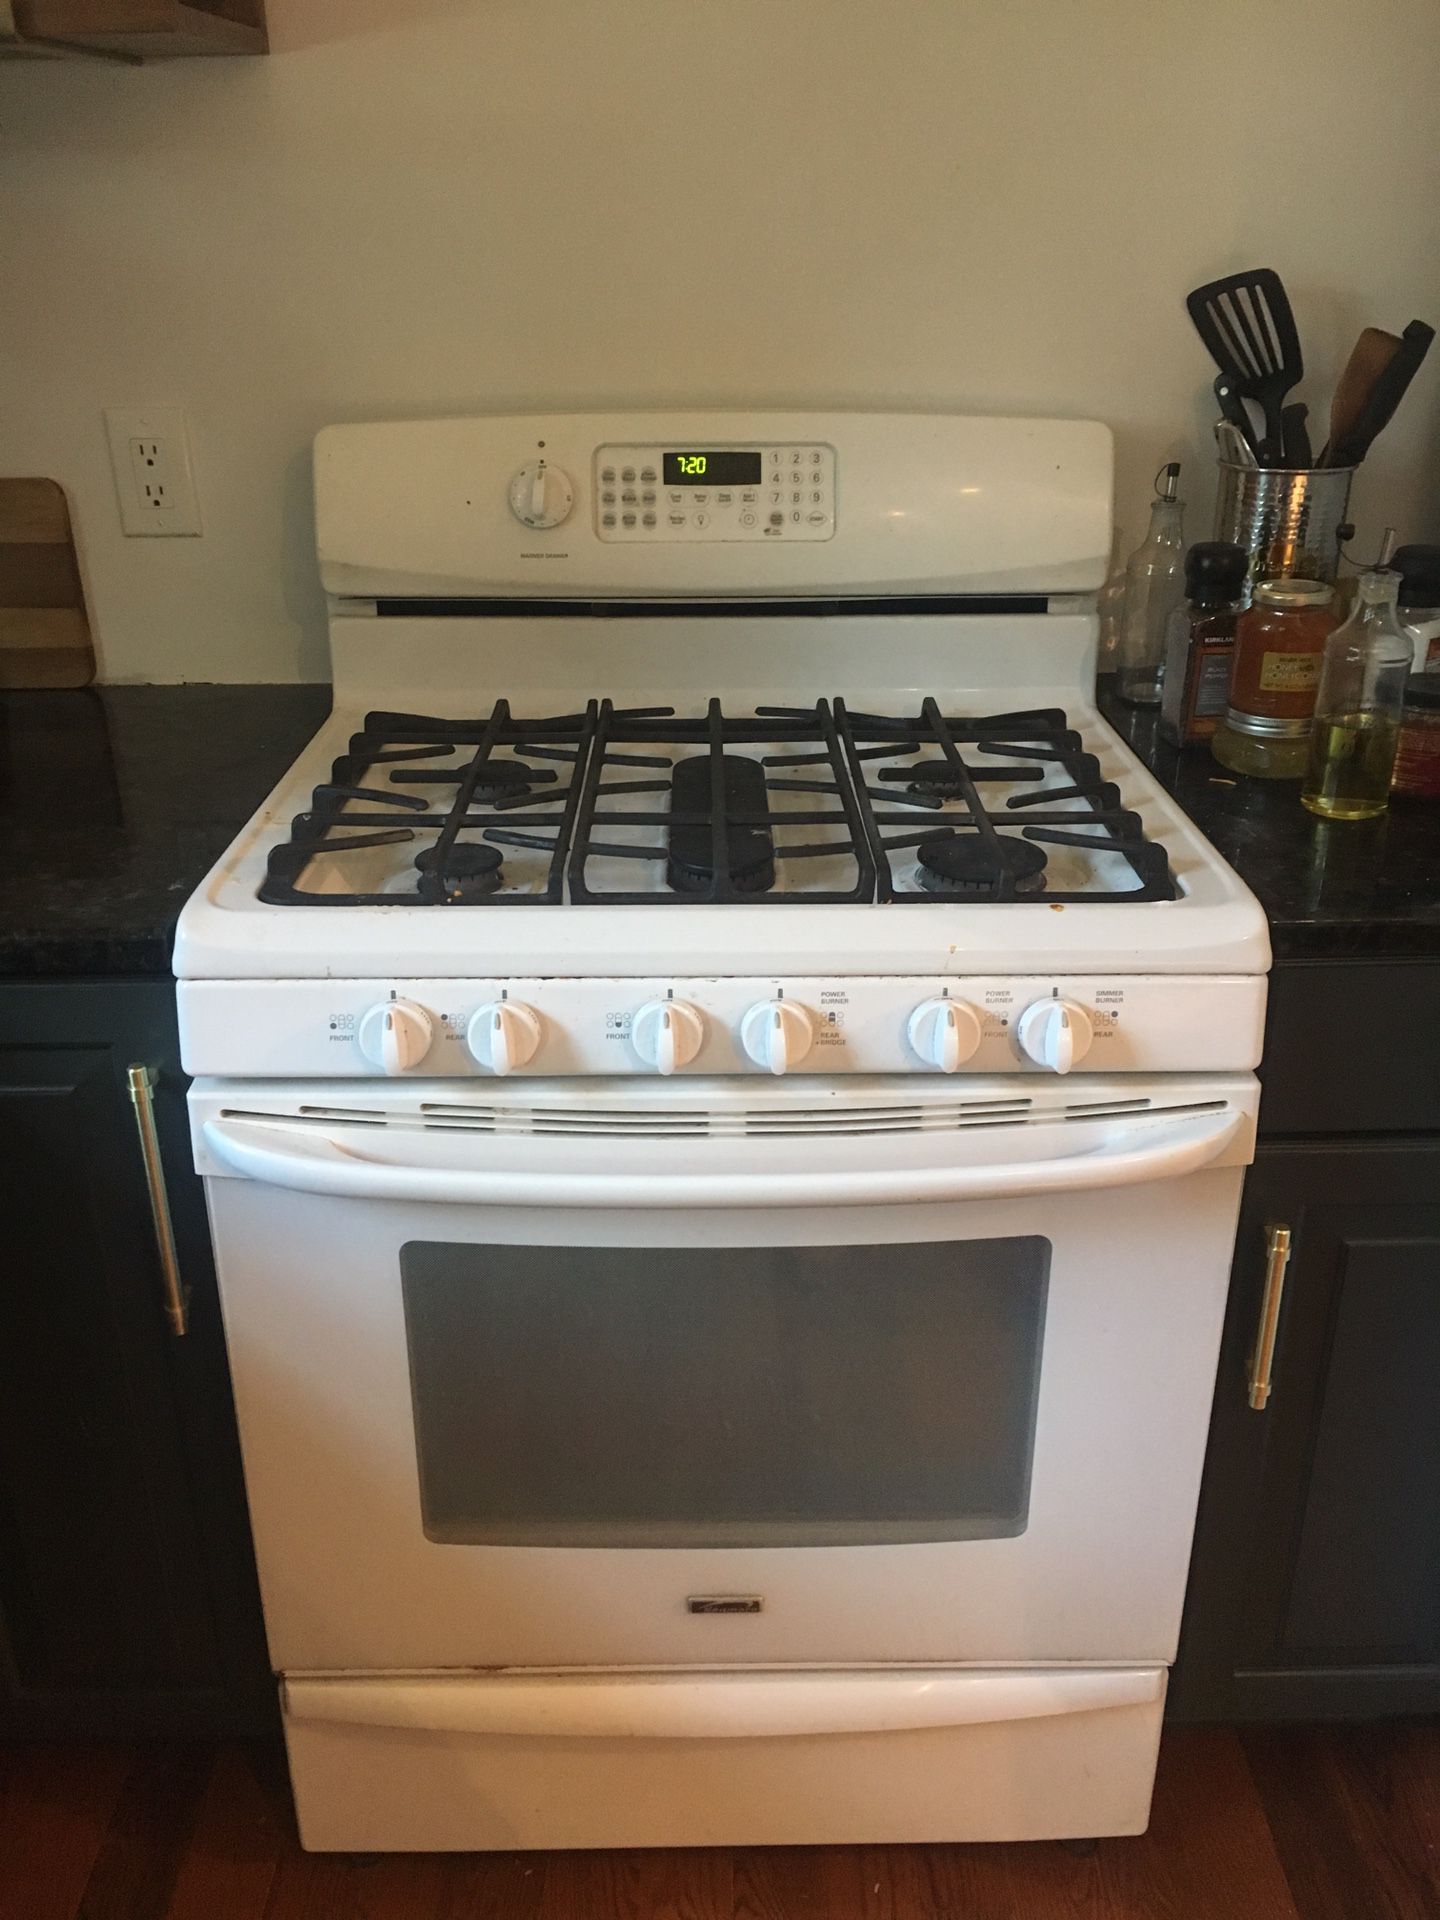 White range, dishwasher, and microwave